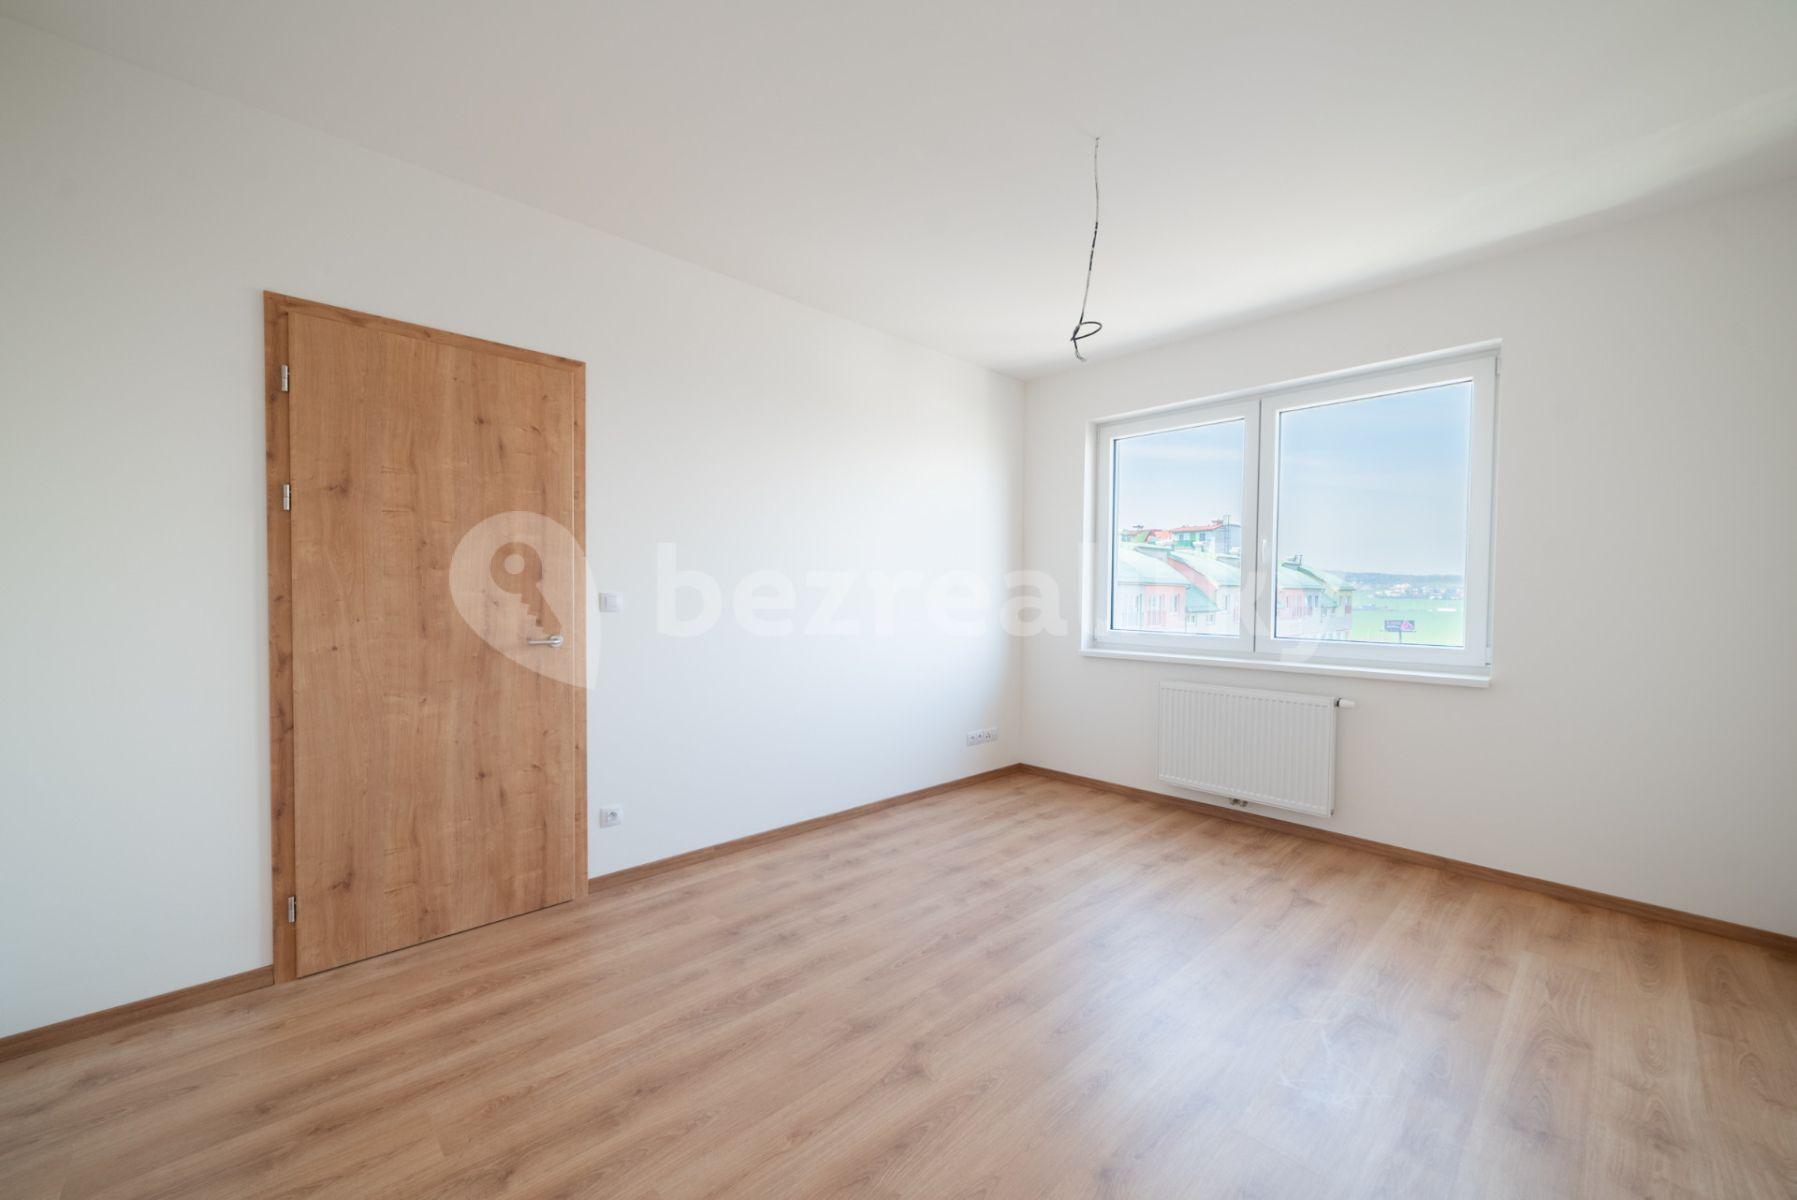 1 bedroom with open-plan kitchen flat for sale, 51 m², Malkovského, Prague, Prague